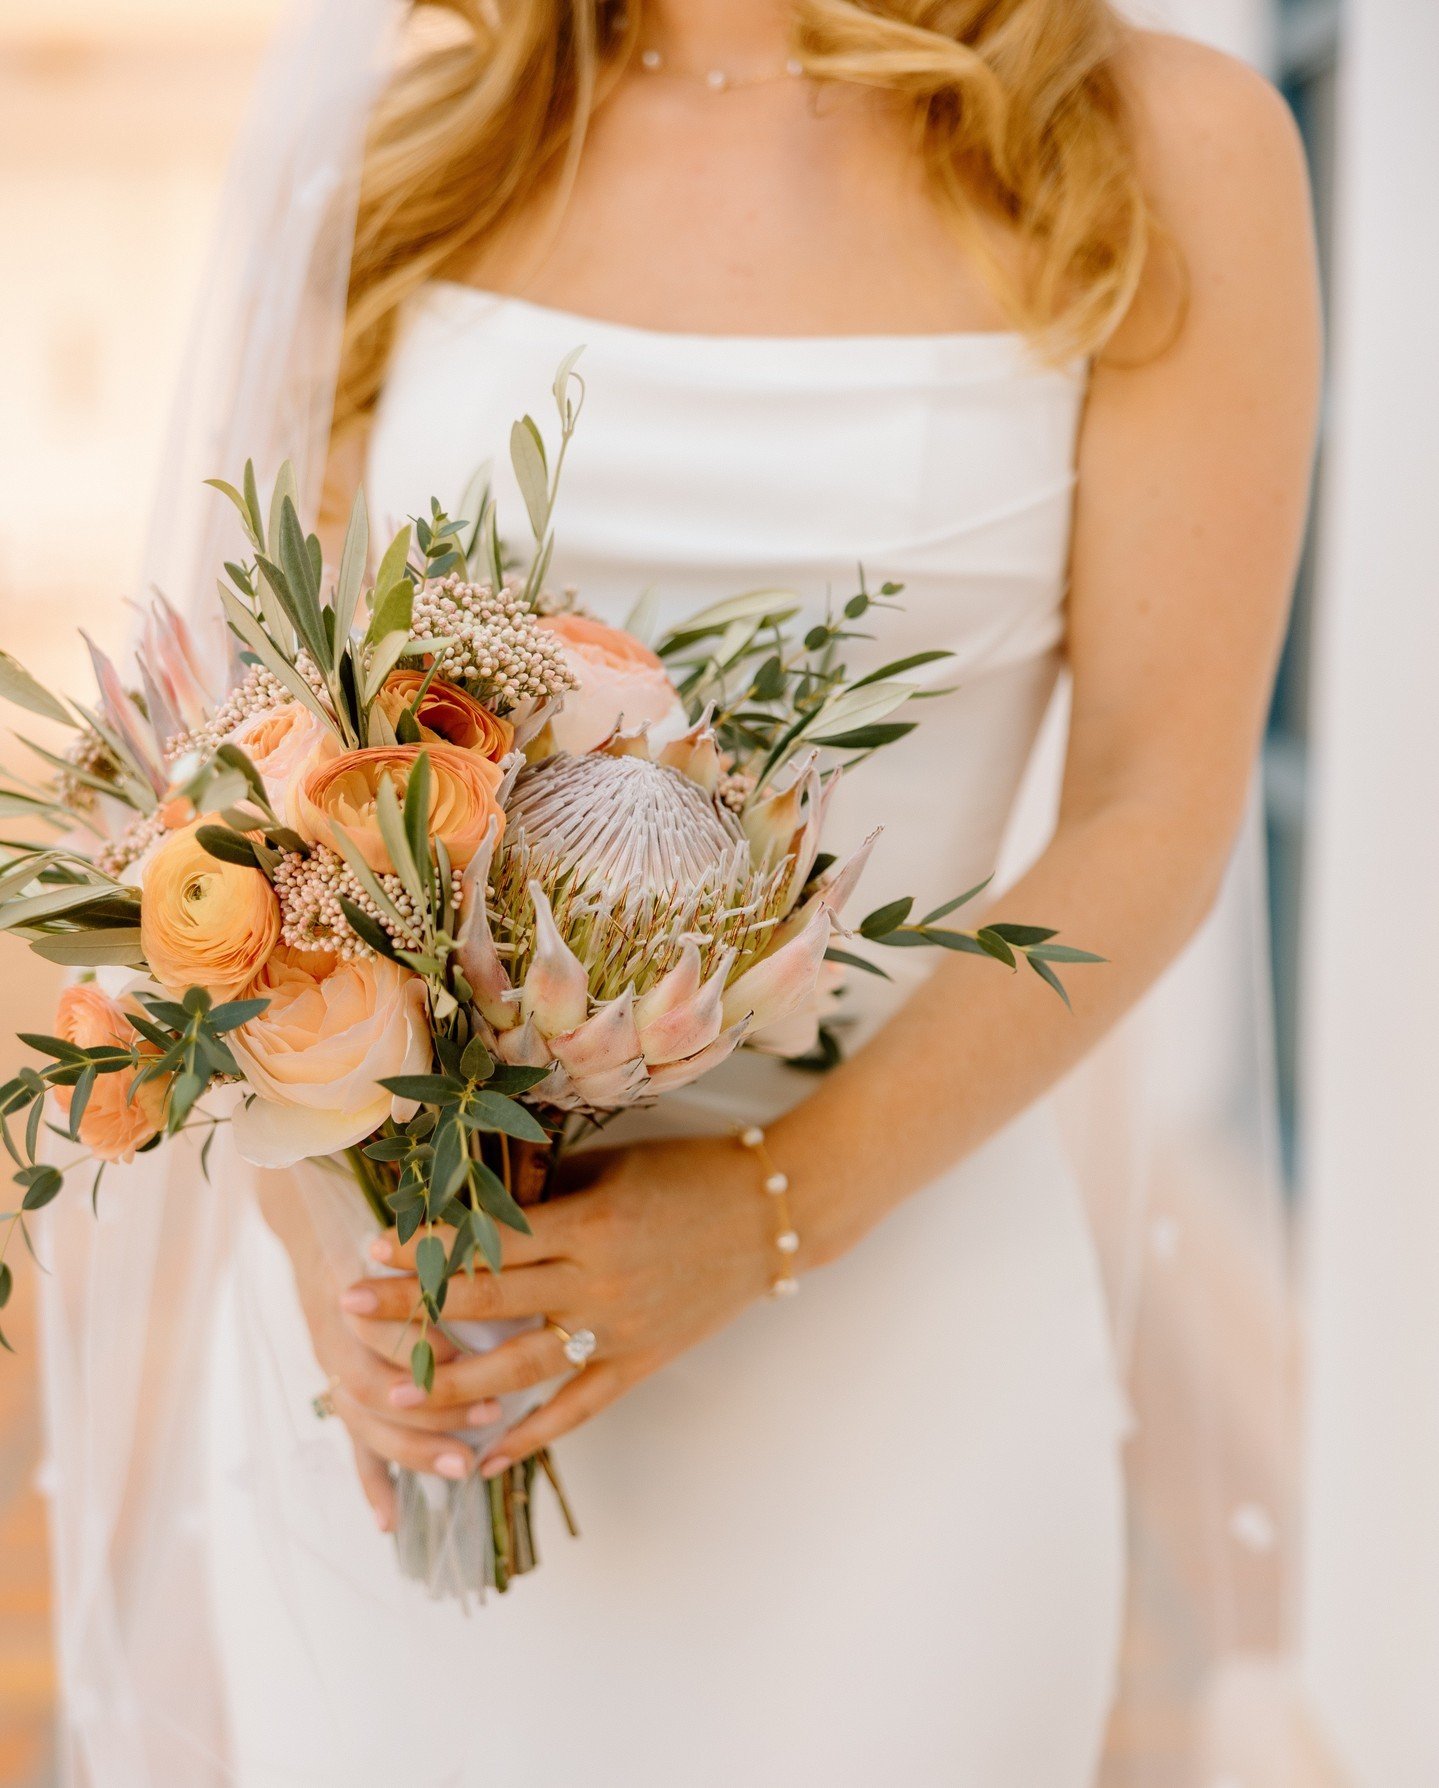 A beautiful bouquet of protea, ranunculus, tea roses, olive branches and eucalyptus.
...
#artisaninspiration #palmspringswedding #artisanevents #artisaneventfloraldecor #bride #weddingfloral